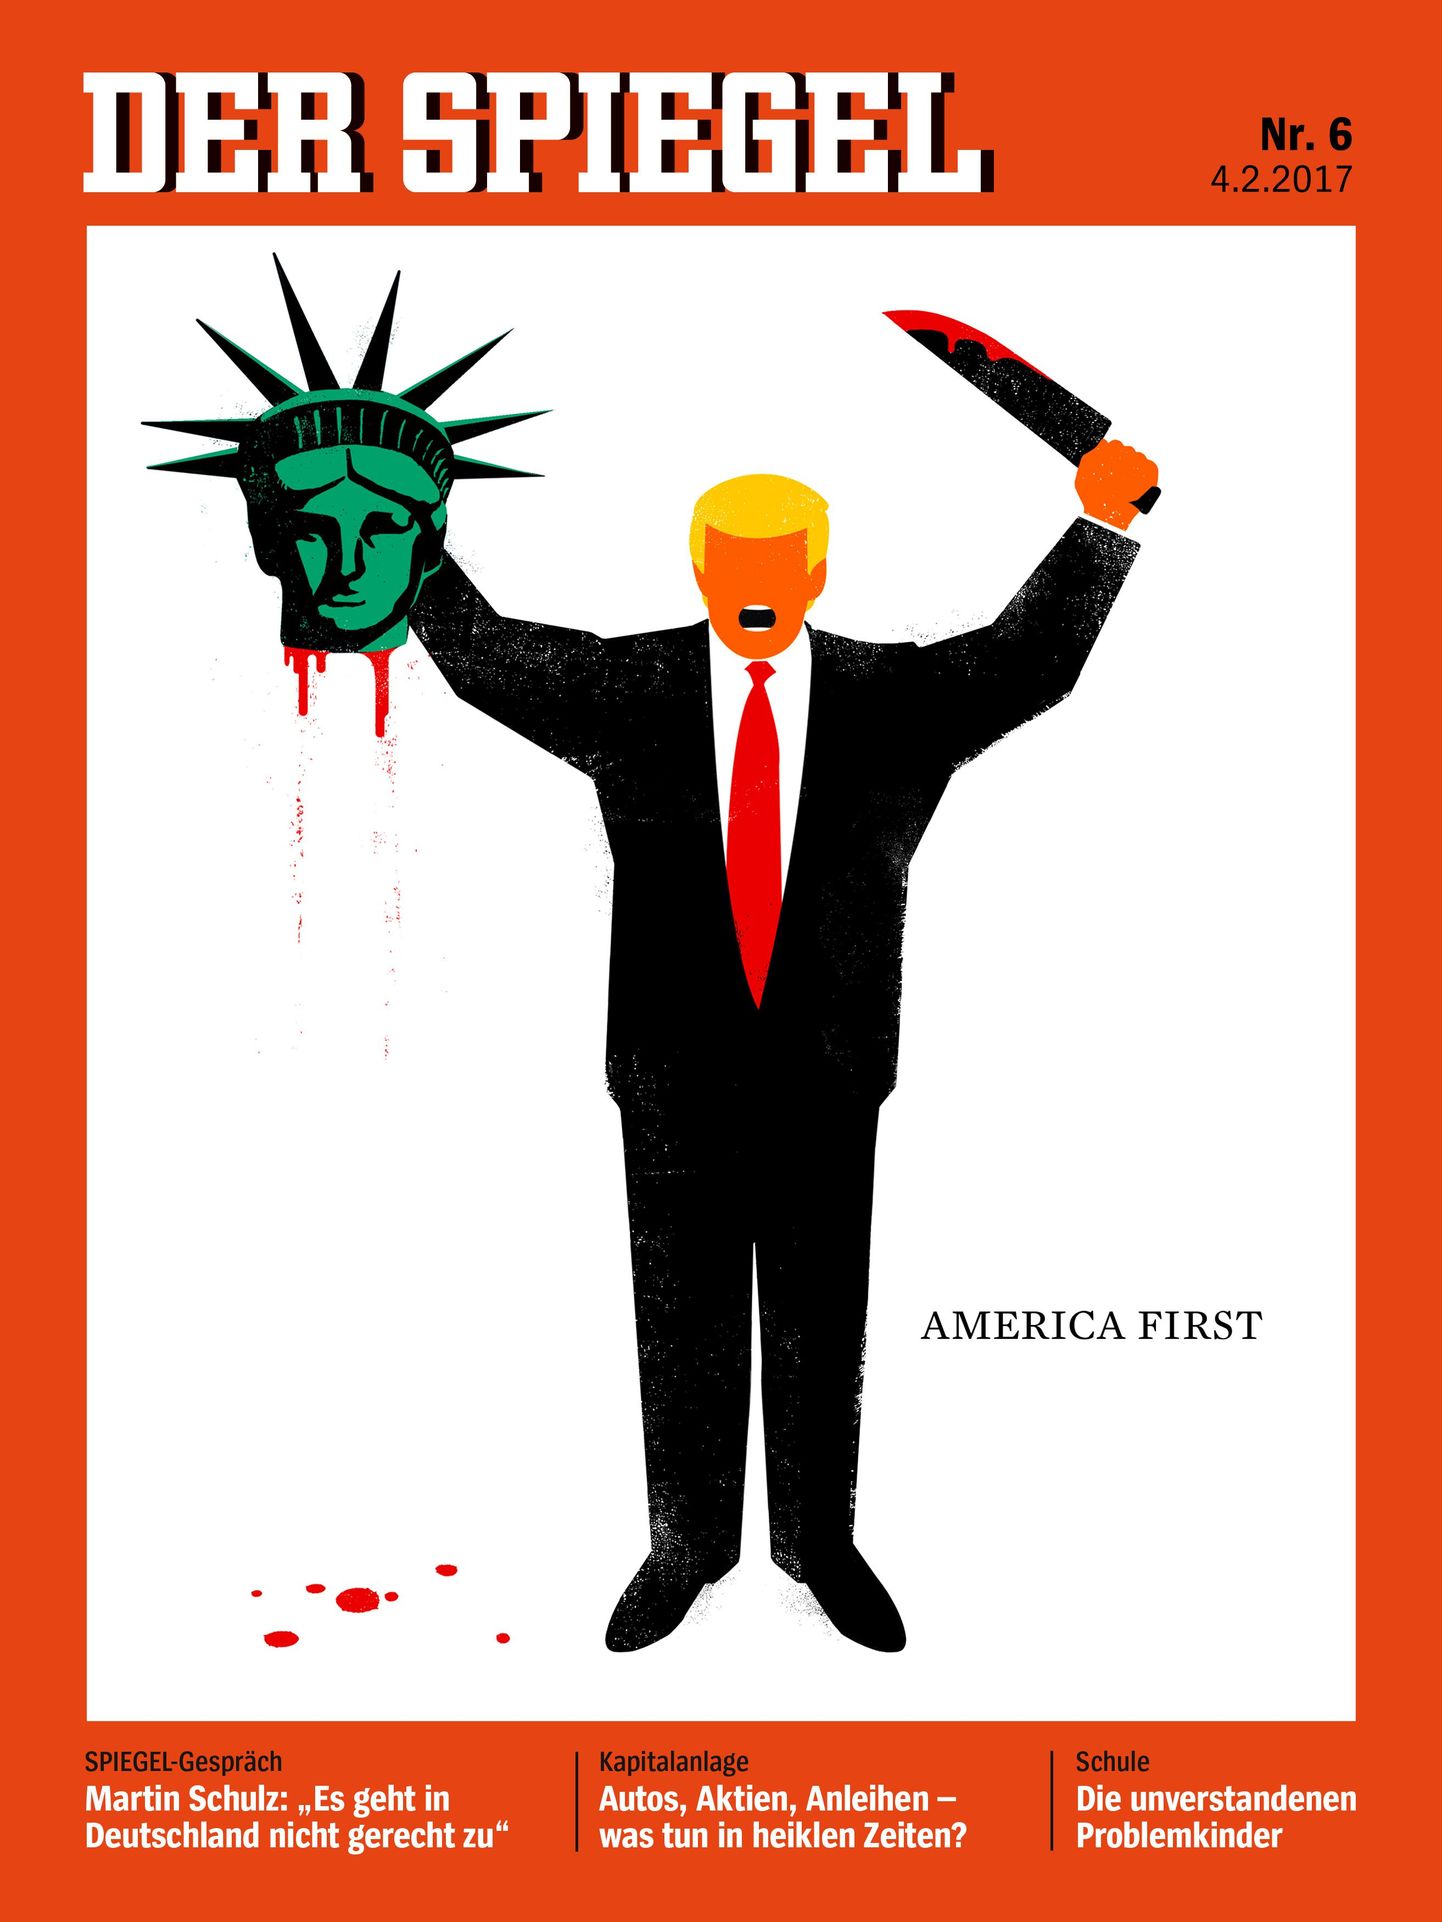 Karikatuur USA presidendist Donald Trumpist